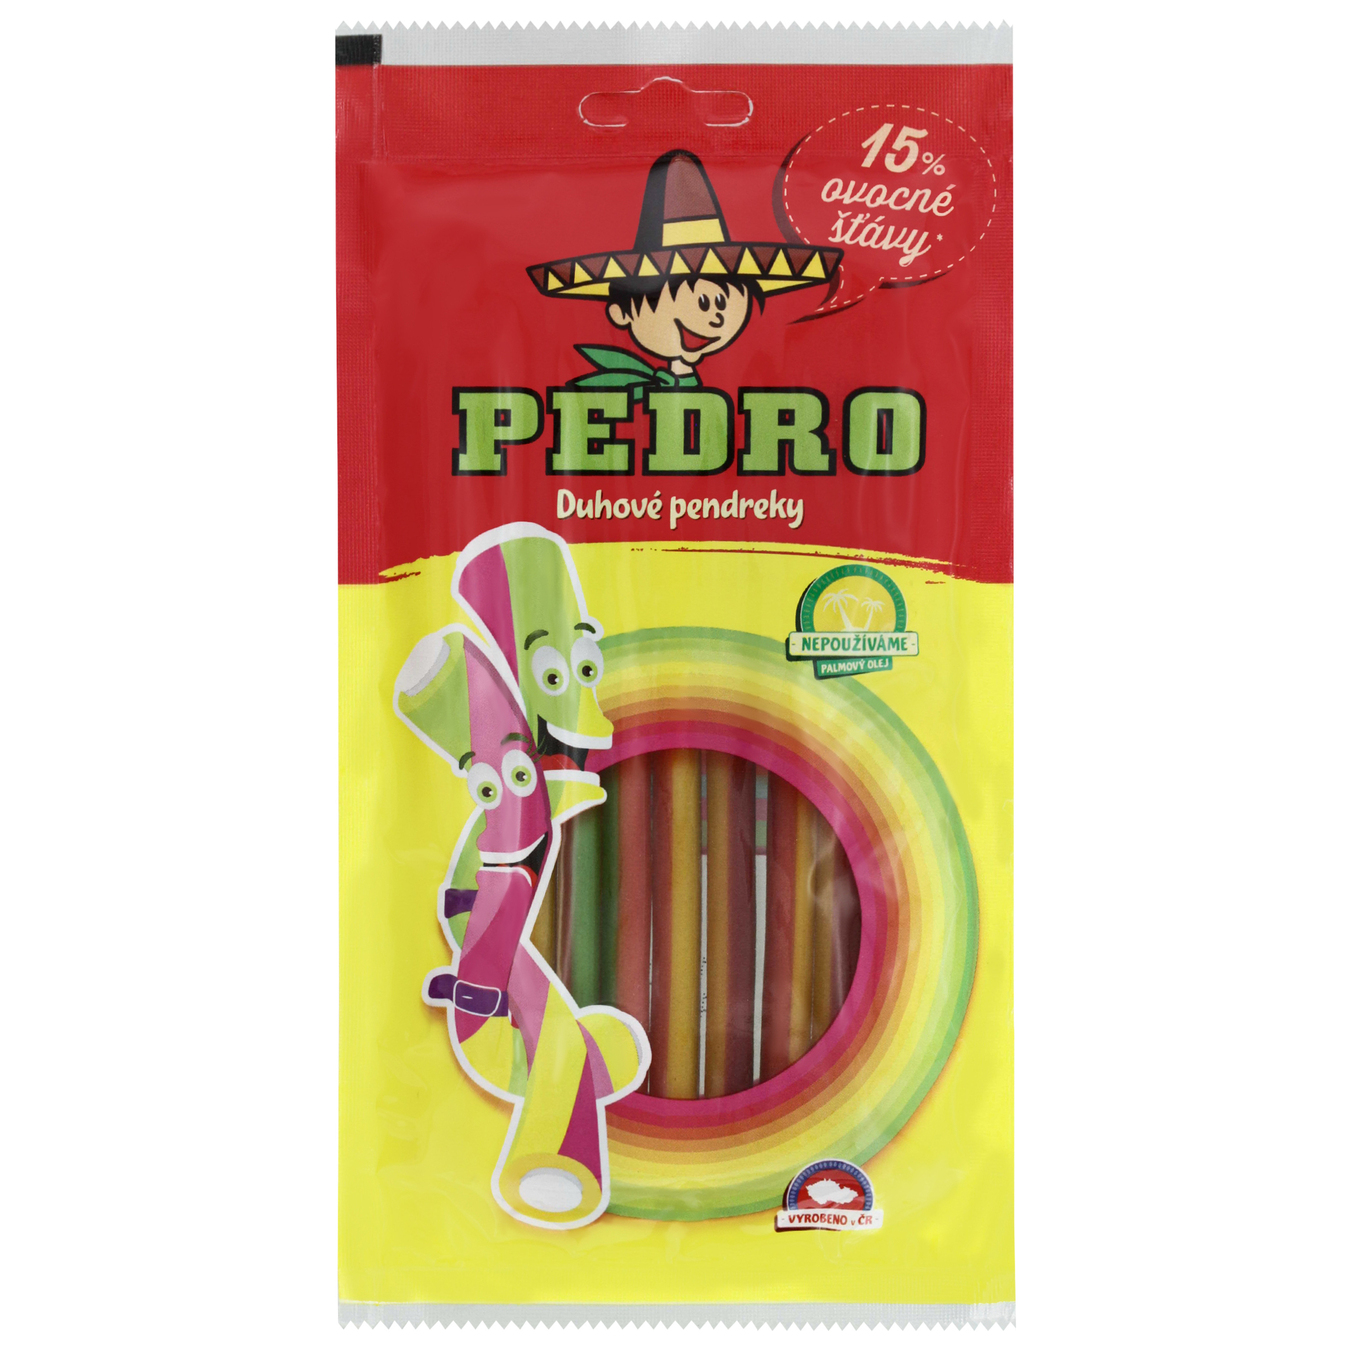 Chewing candies Pedro Rainbow pencils 85g